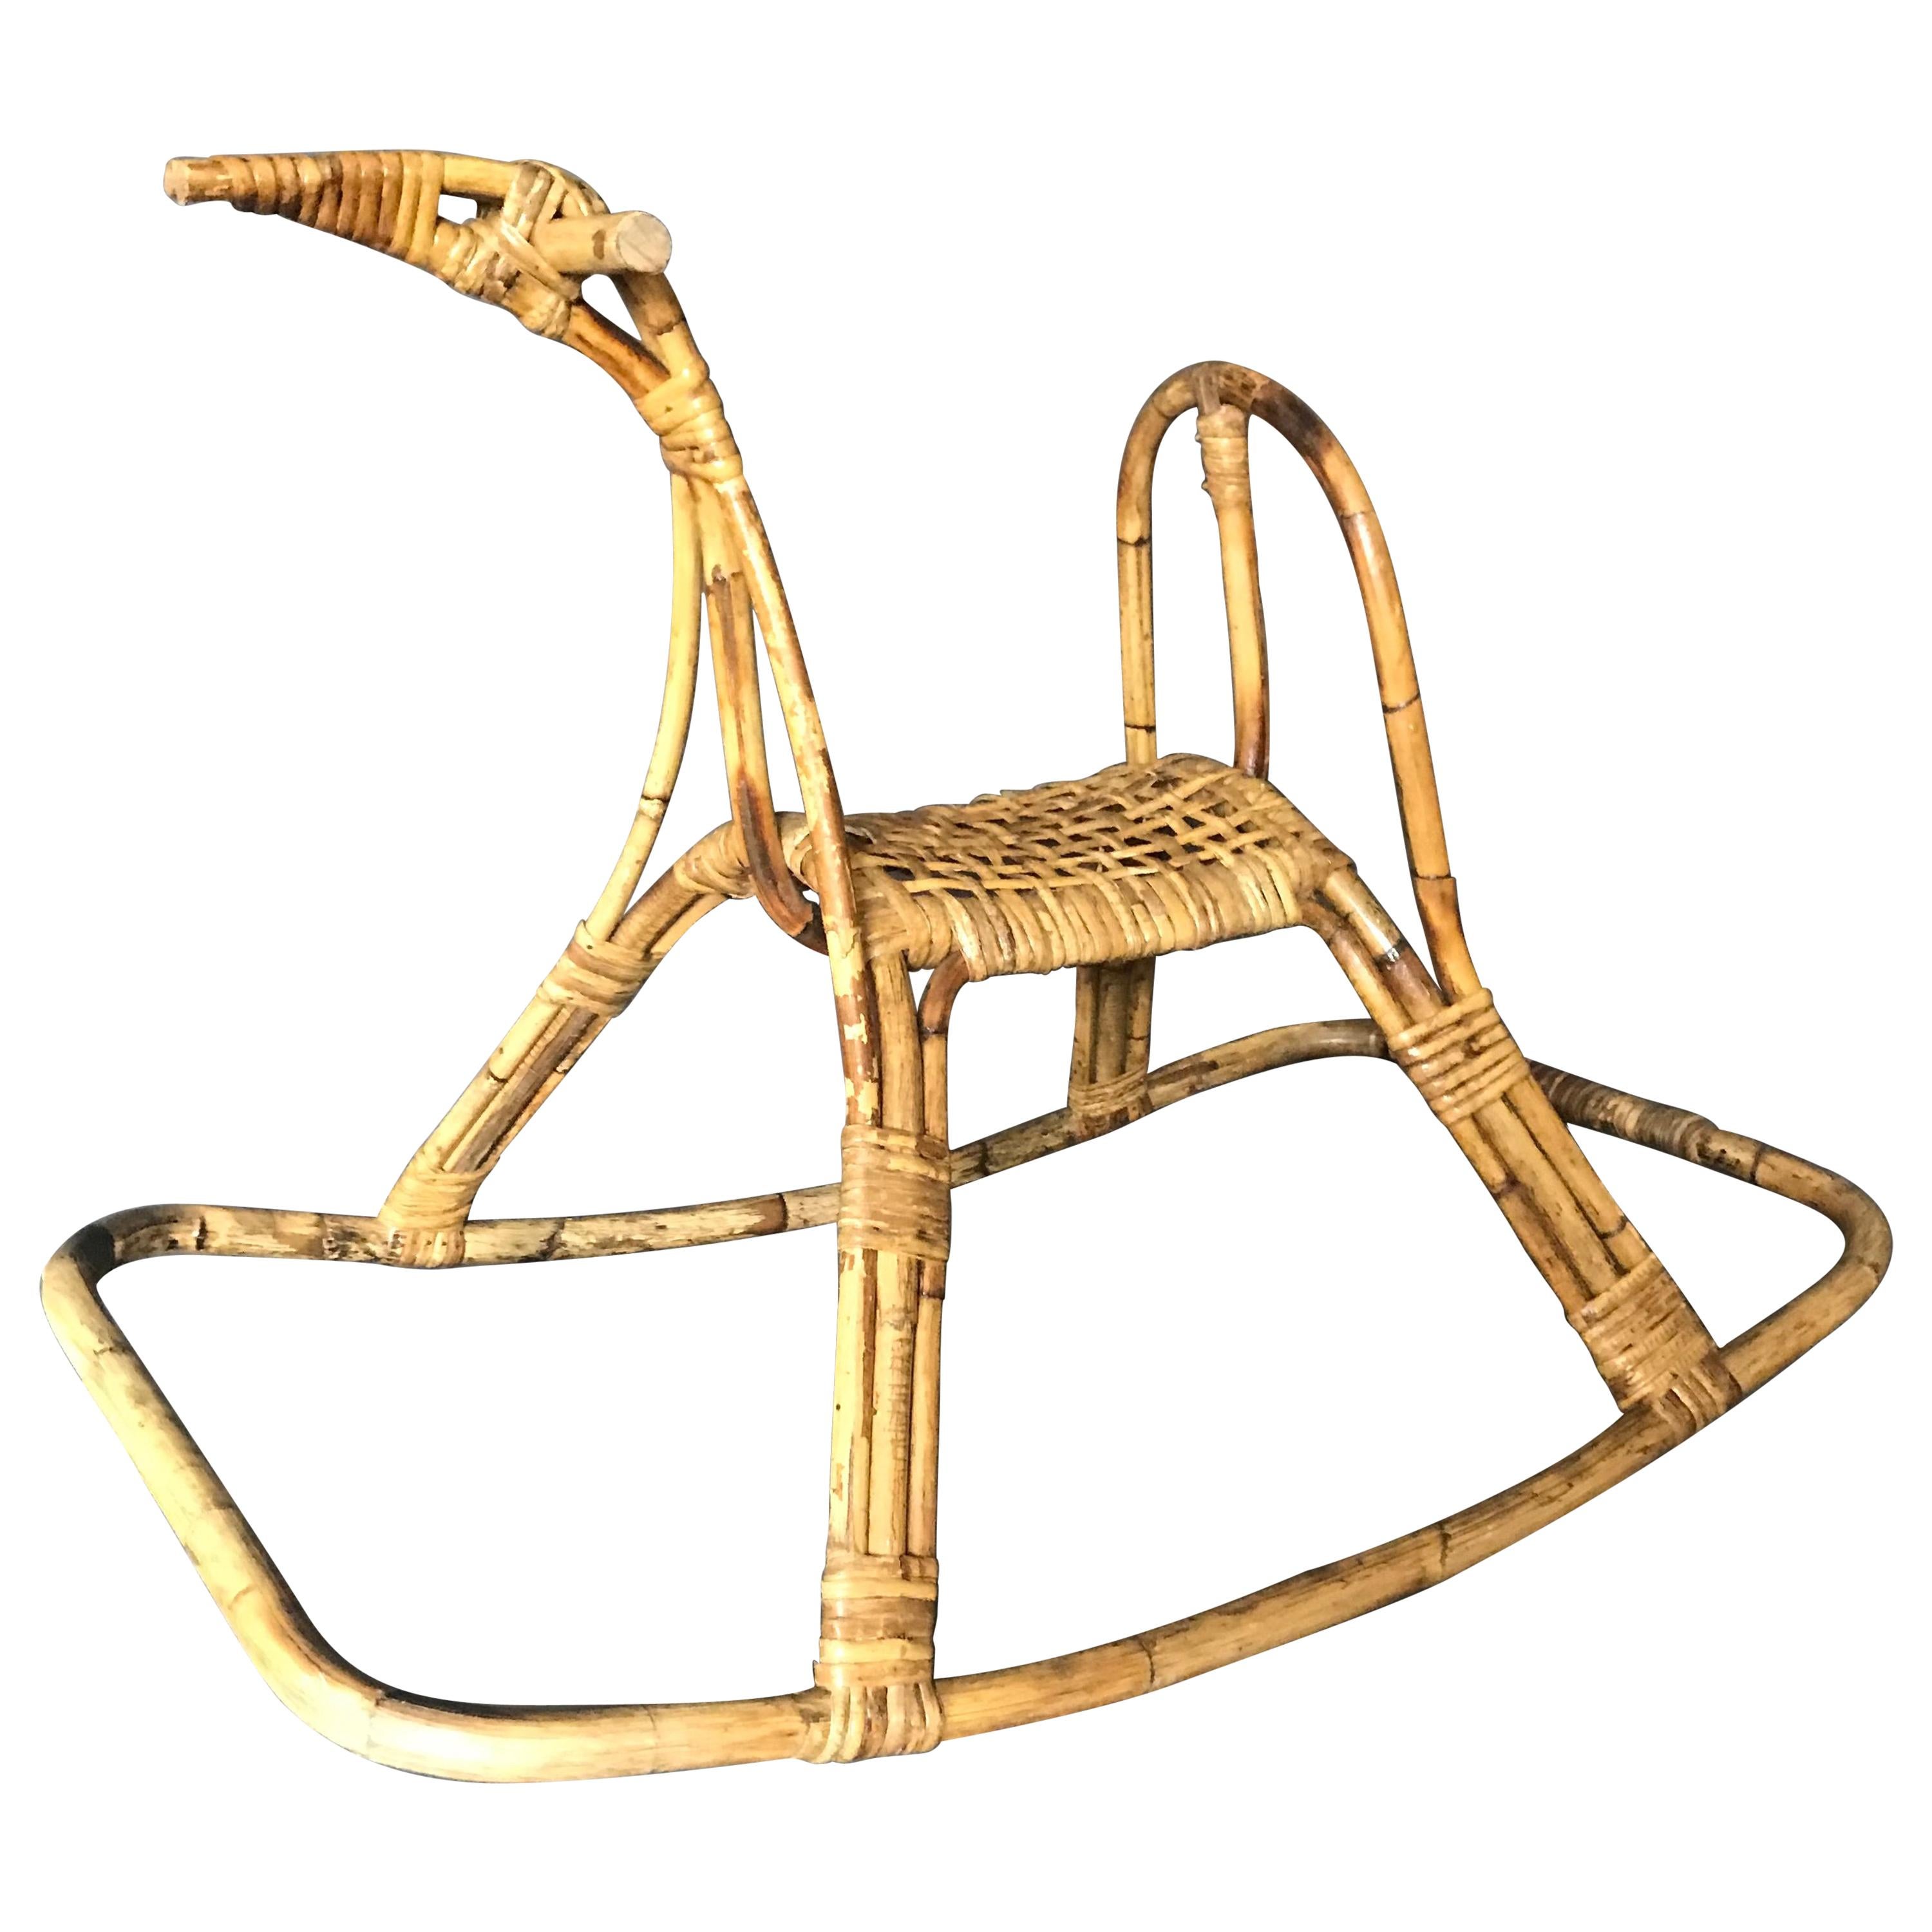 Italian Midcentury Rocking Horse Sculpture. Italian midcentury rattan rocking horse sculpture. Italy, circa 1960.
Dimensions: H 23 in. x W 30 in. x D 18 in.